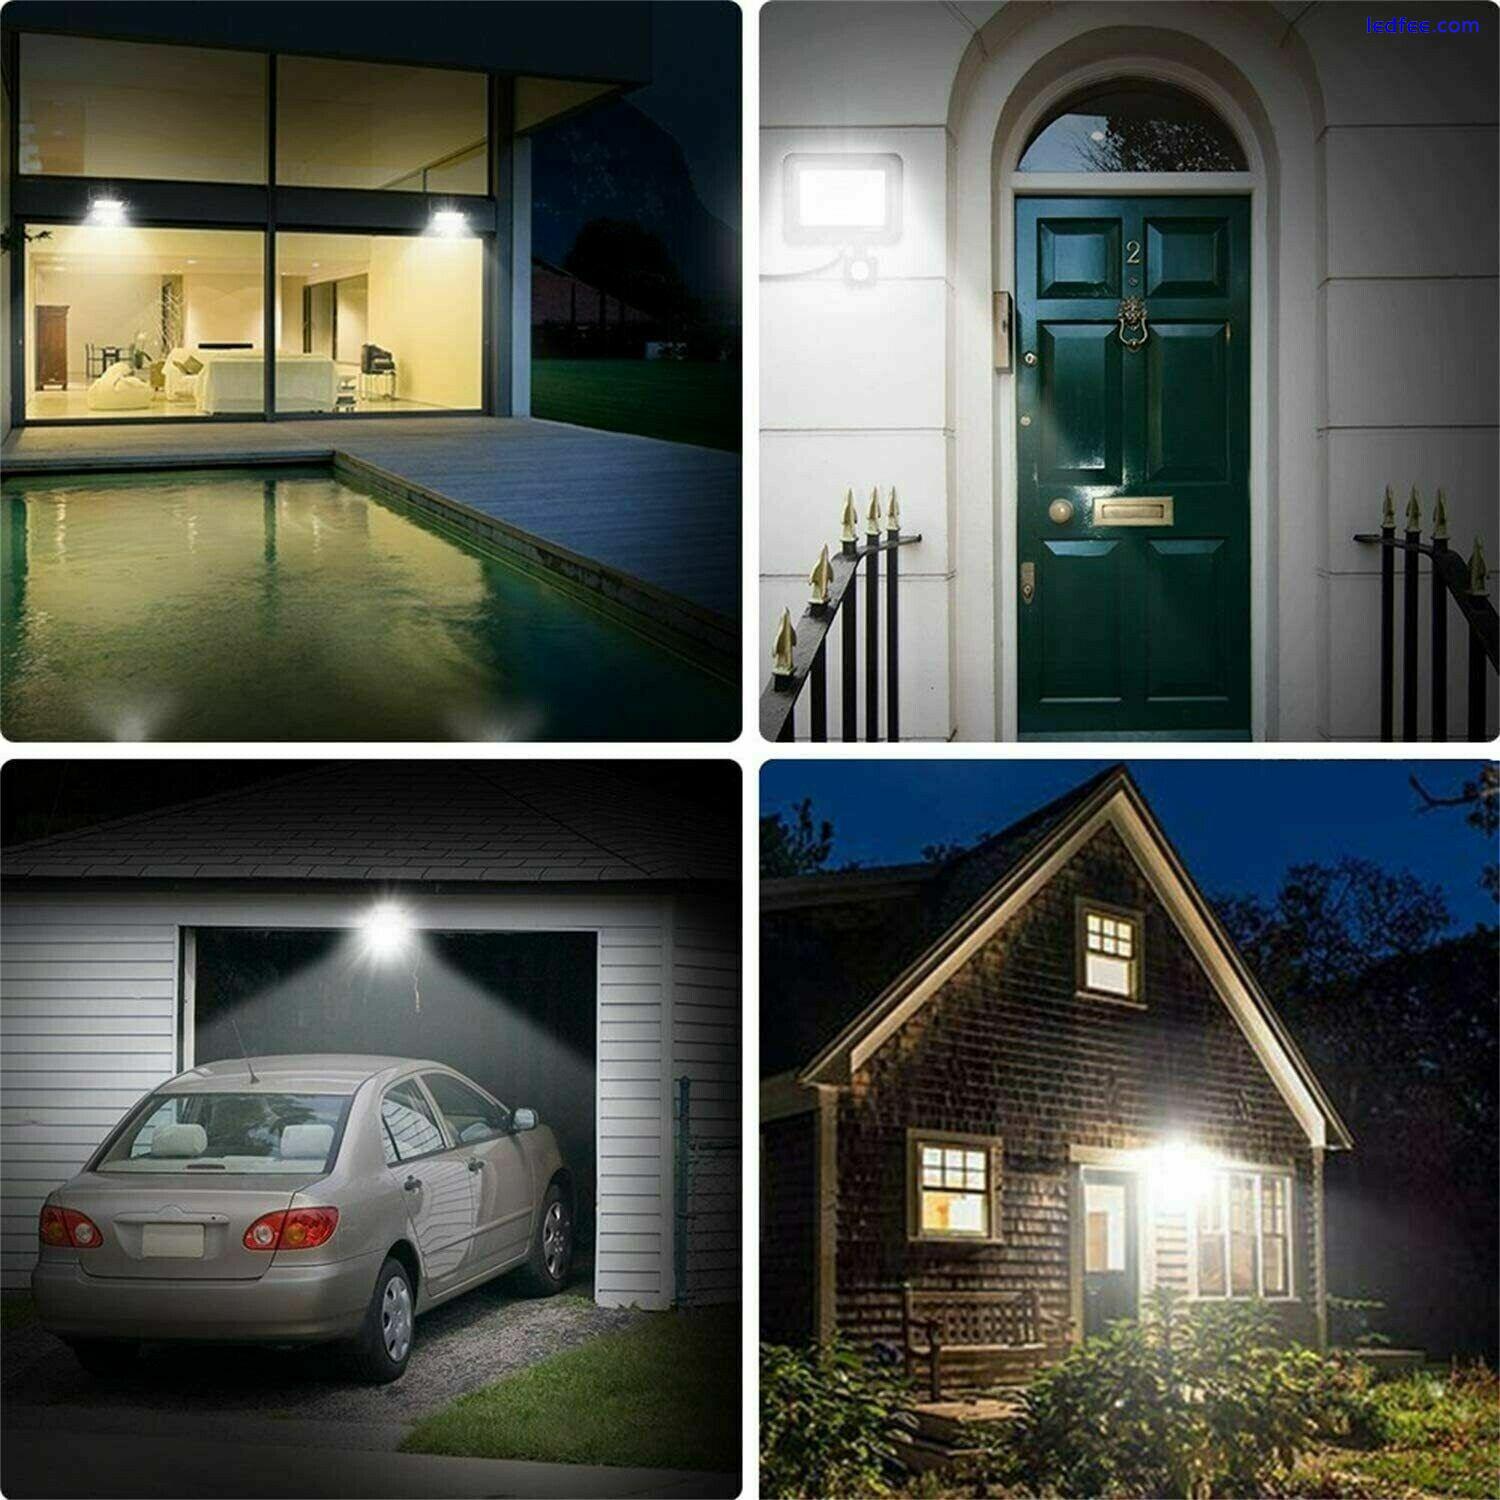 10W-100W Outdoor LED Floodlight PIR Motion Sensor Garden Flood Security Light UK 4 